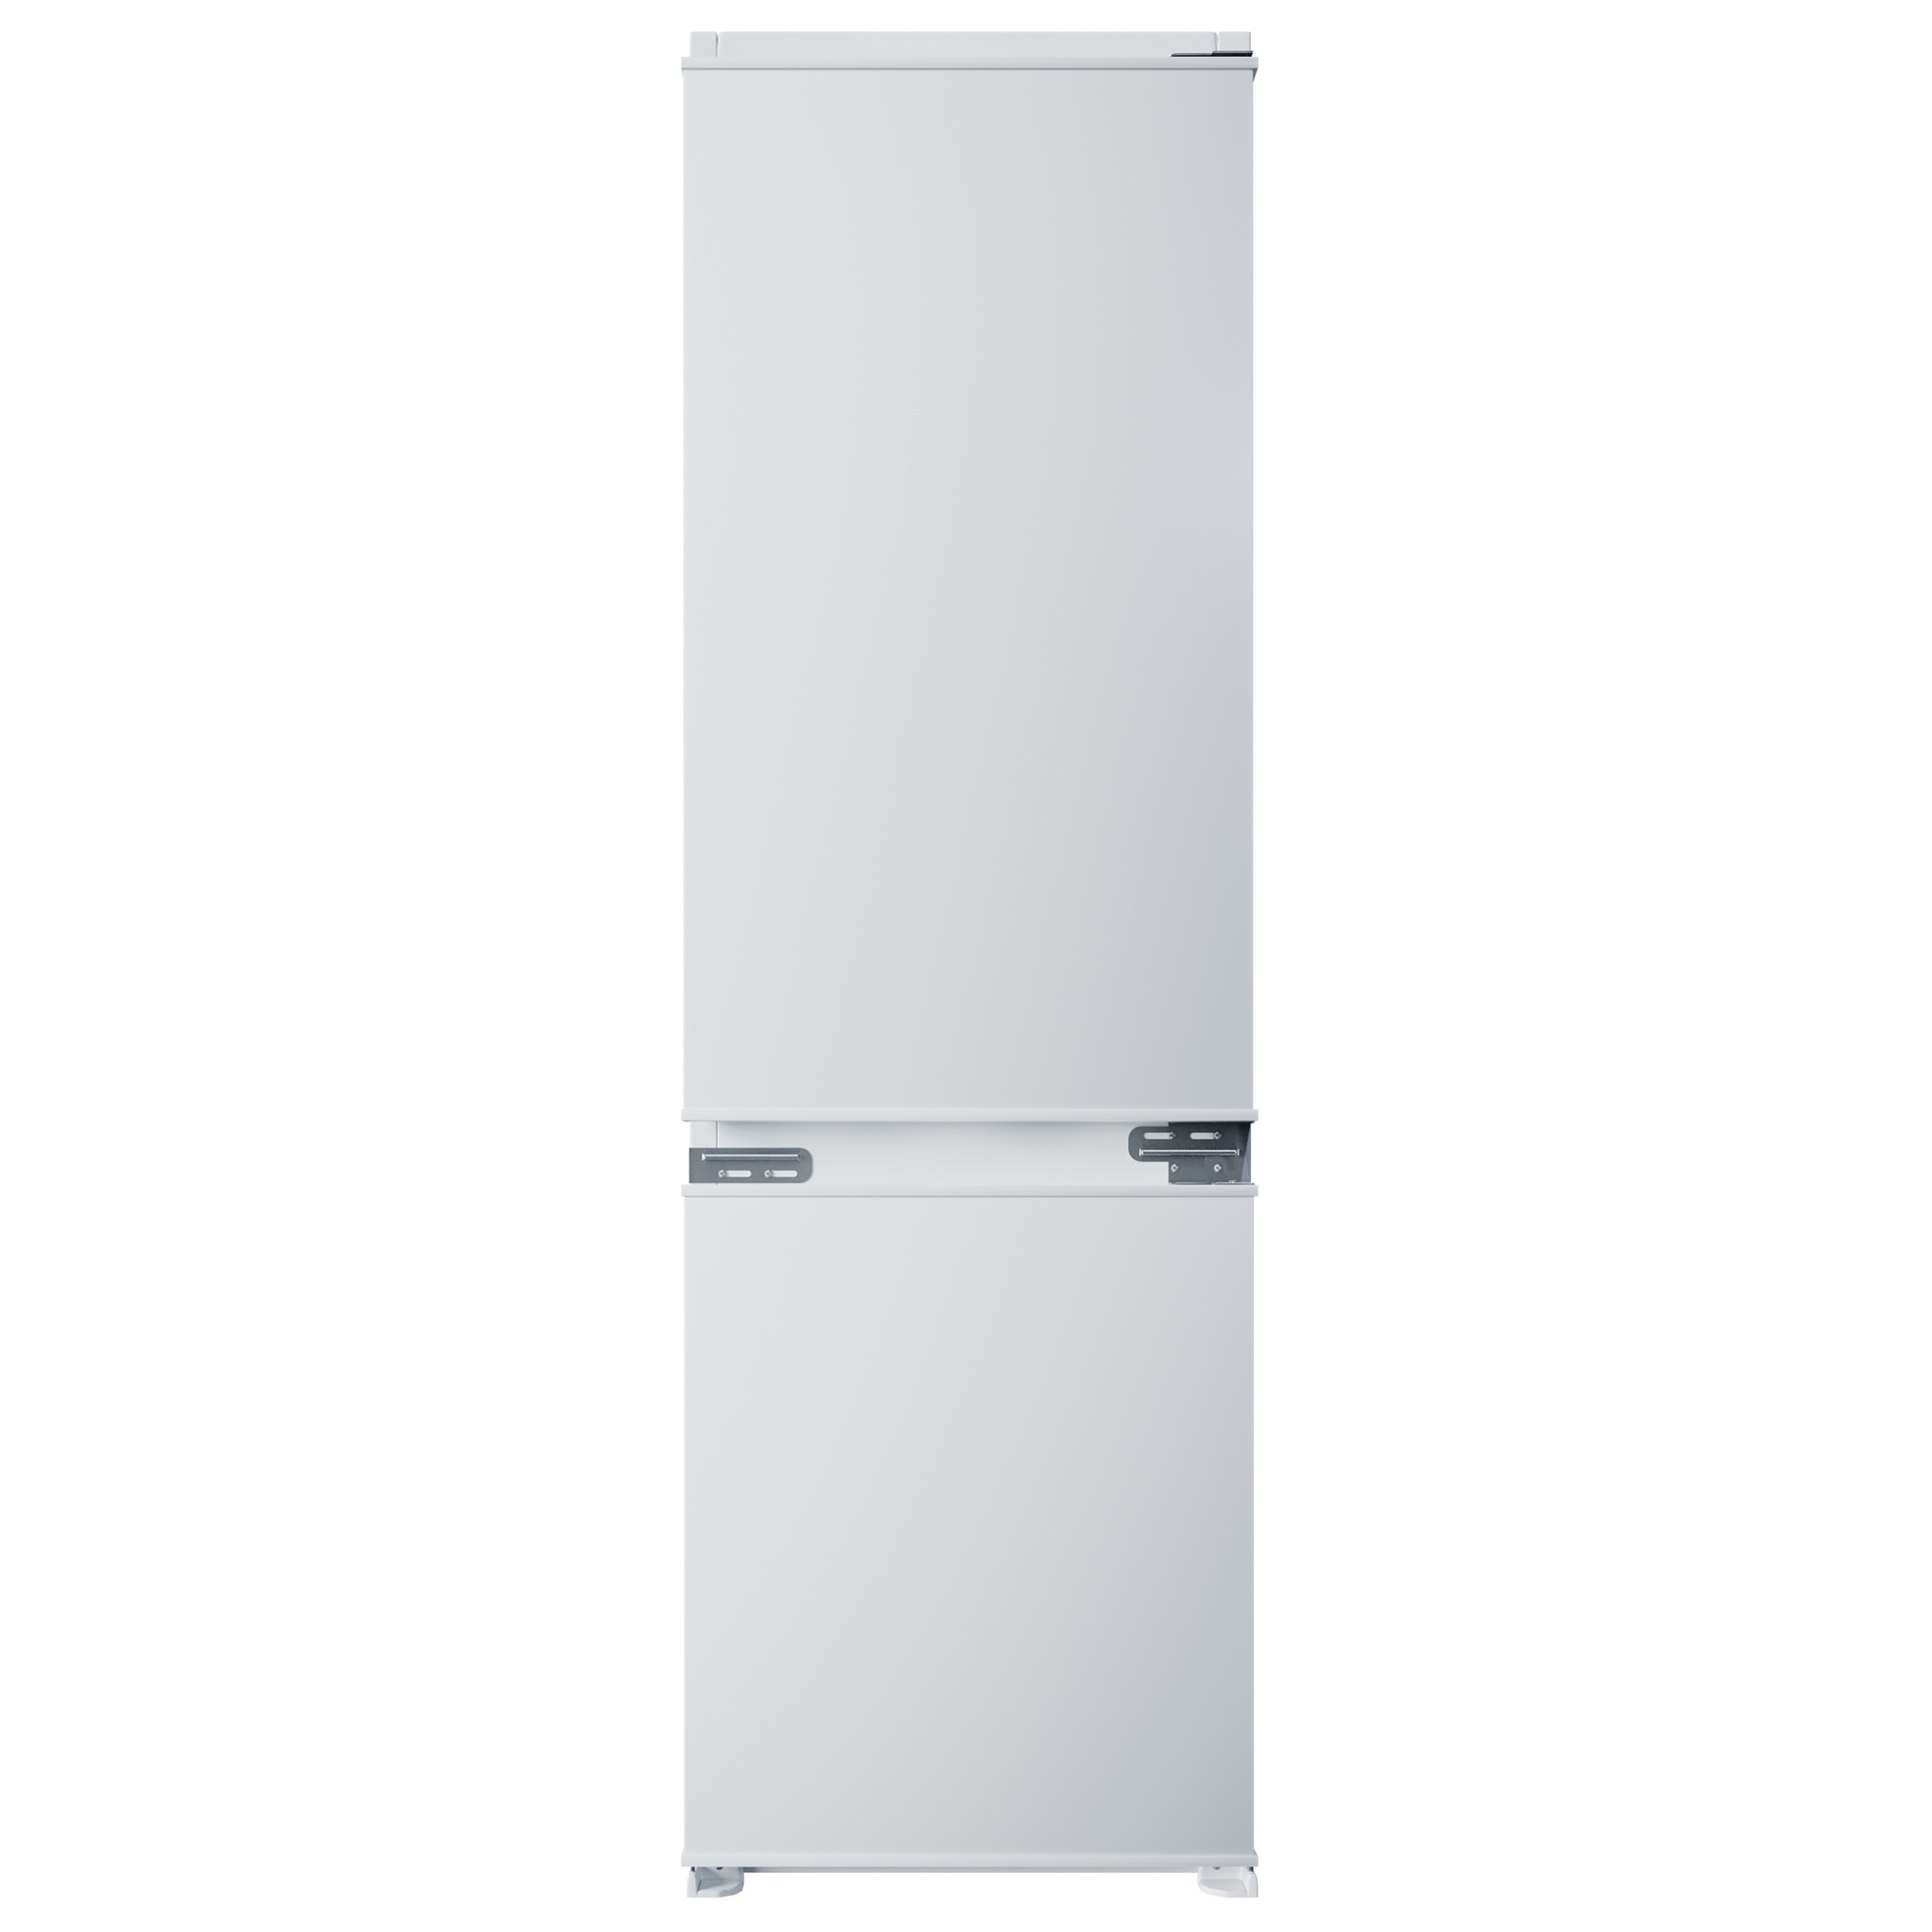 Встраиваемый холодильник Krona BALFRIN KRFR 101 белый встраиваемый холодильник krona bristen fnf krfr 102 white